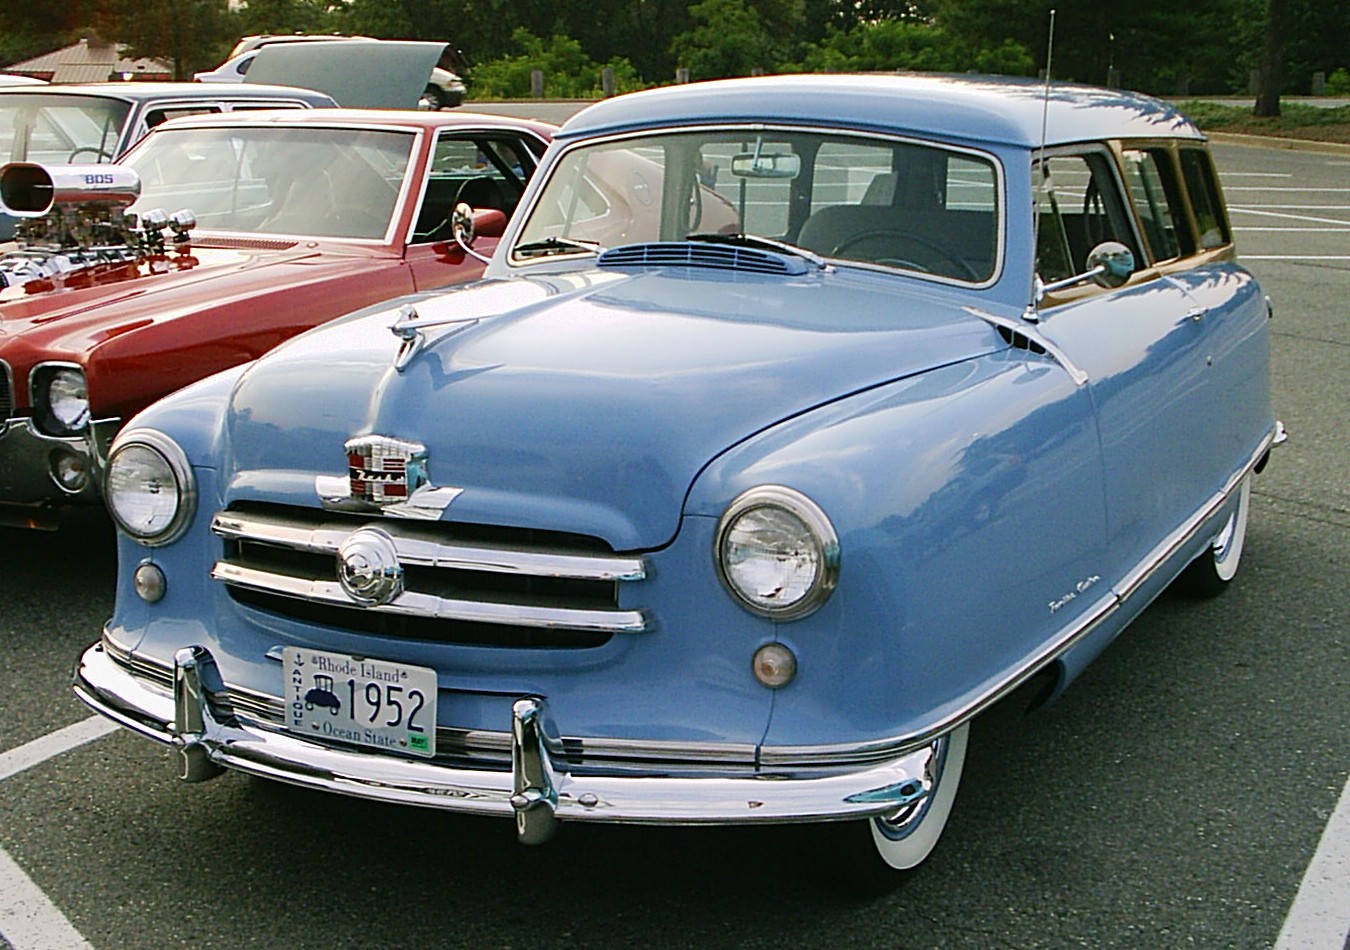 Dossier: 1952 Nash Rambler avant de wagon bleu.jpg - Wikimedia Commons